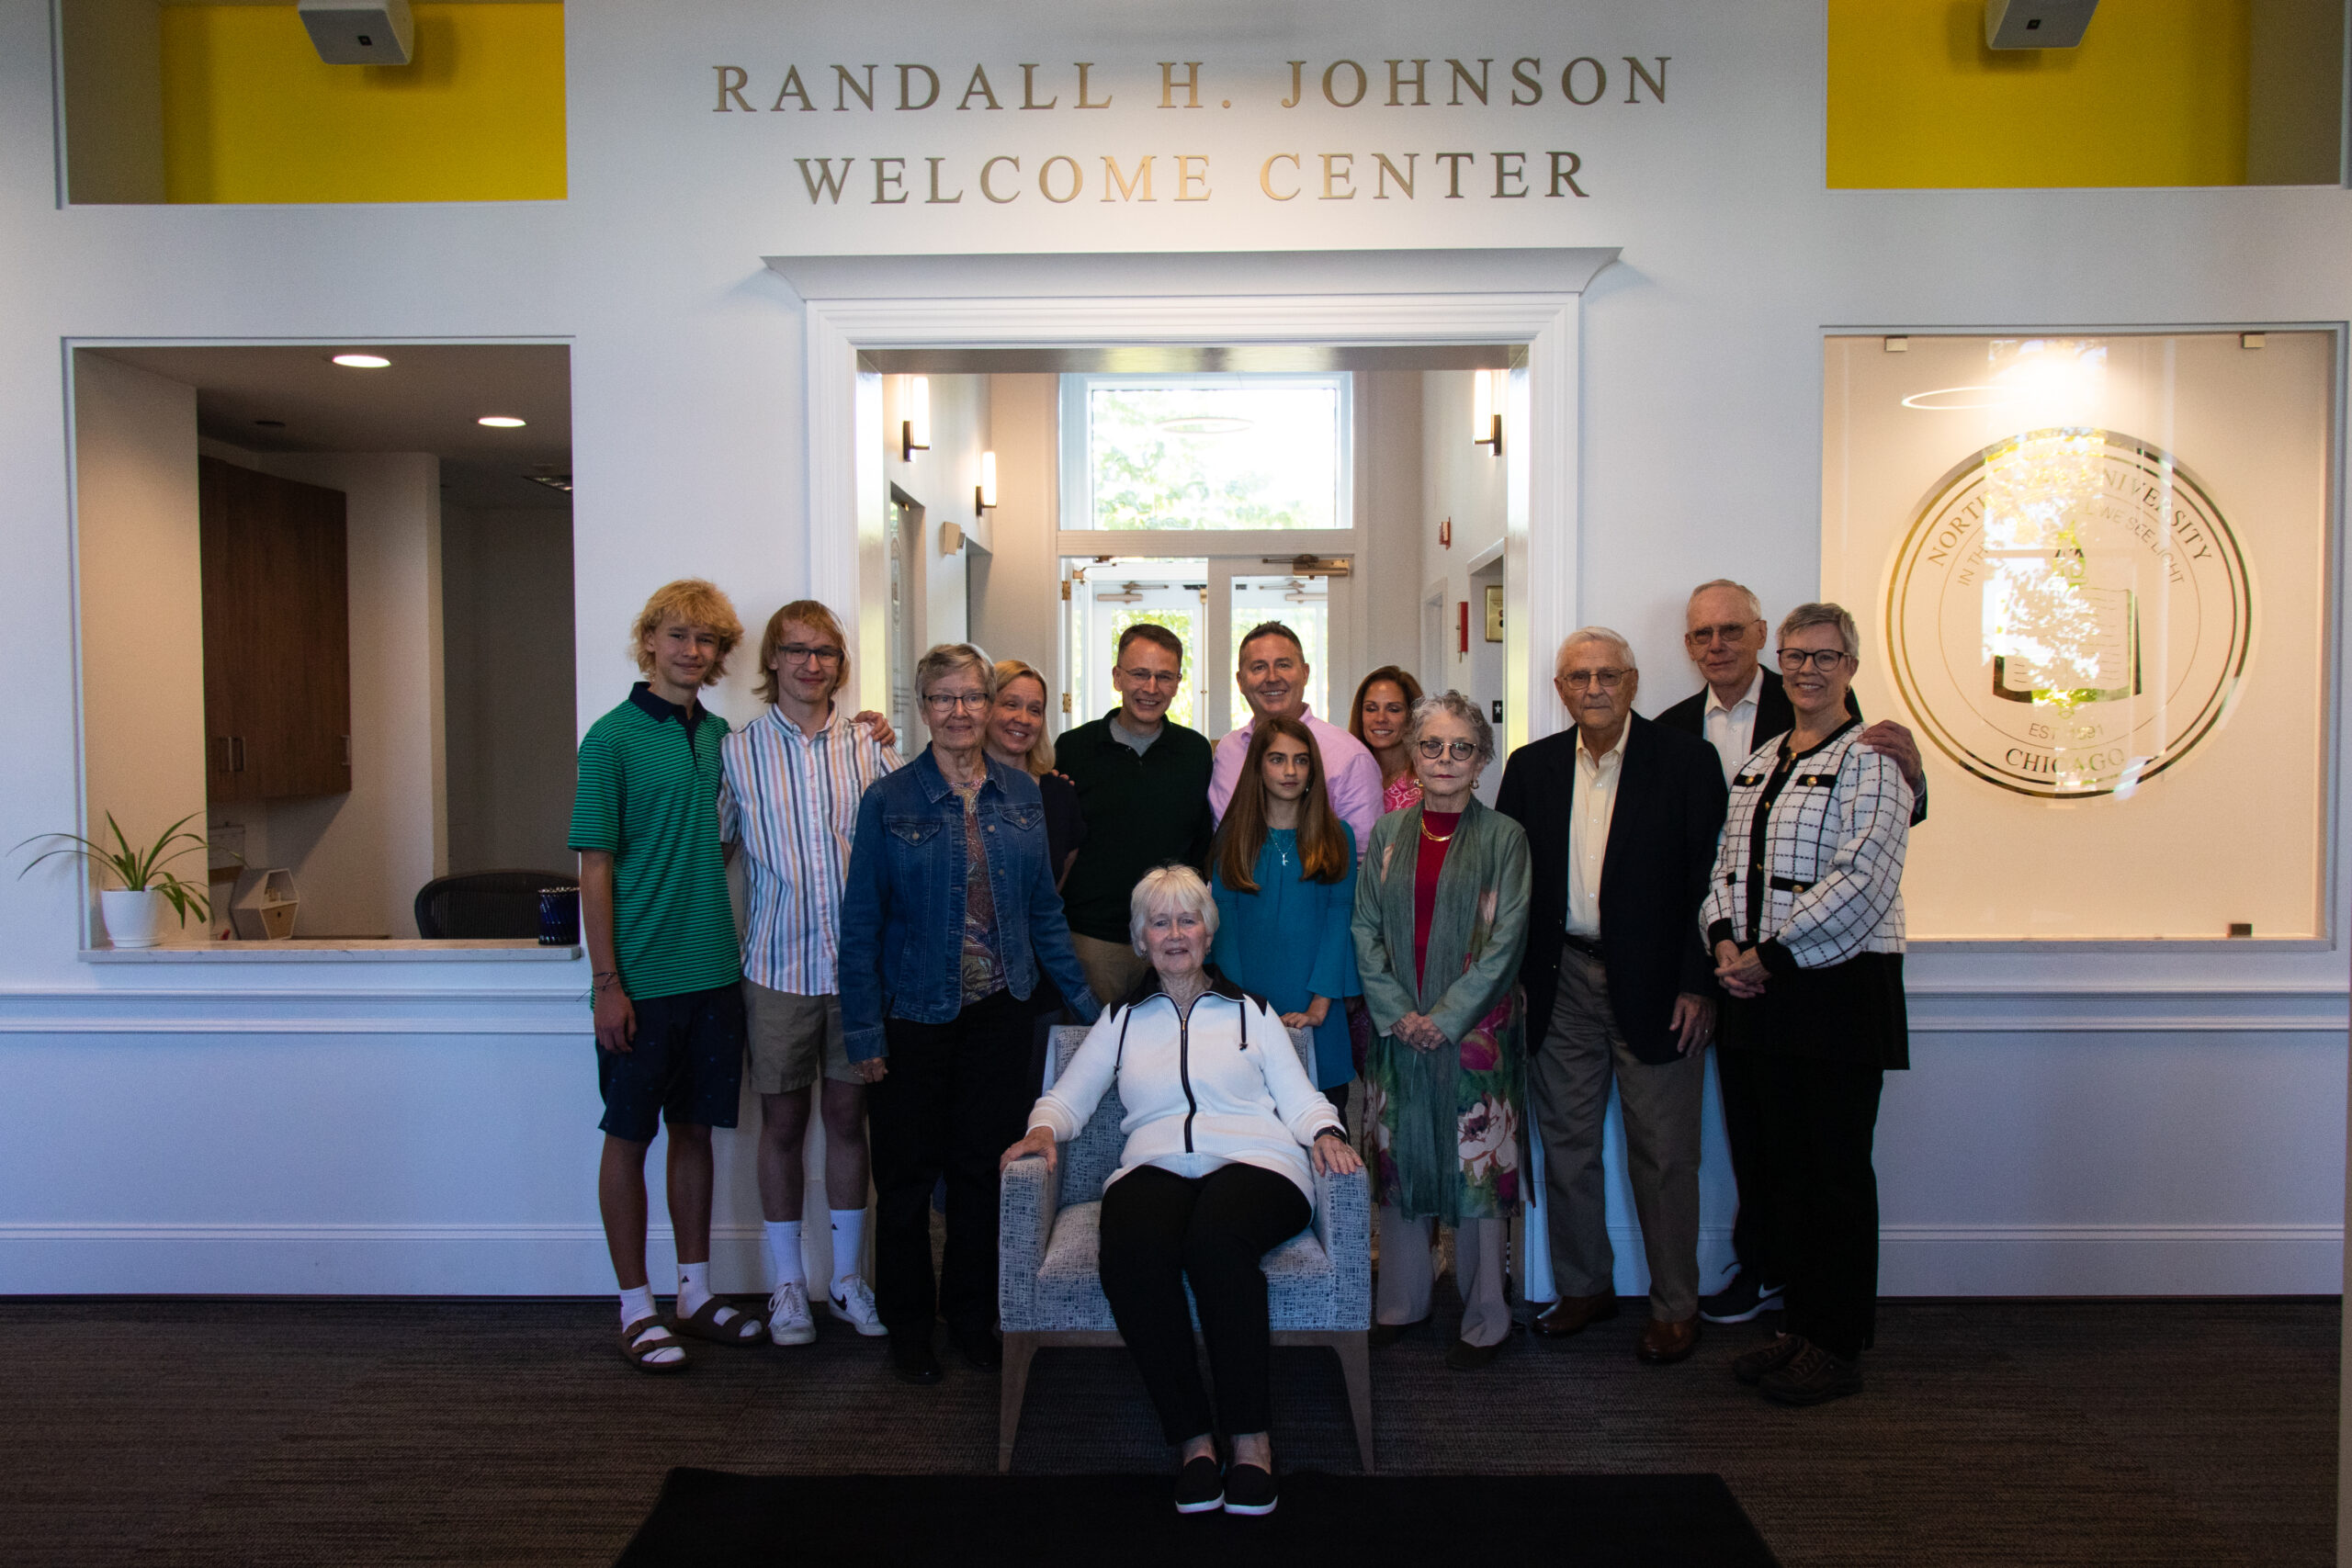 The family of Randall H. Johnson